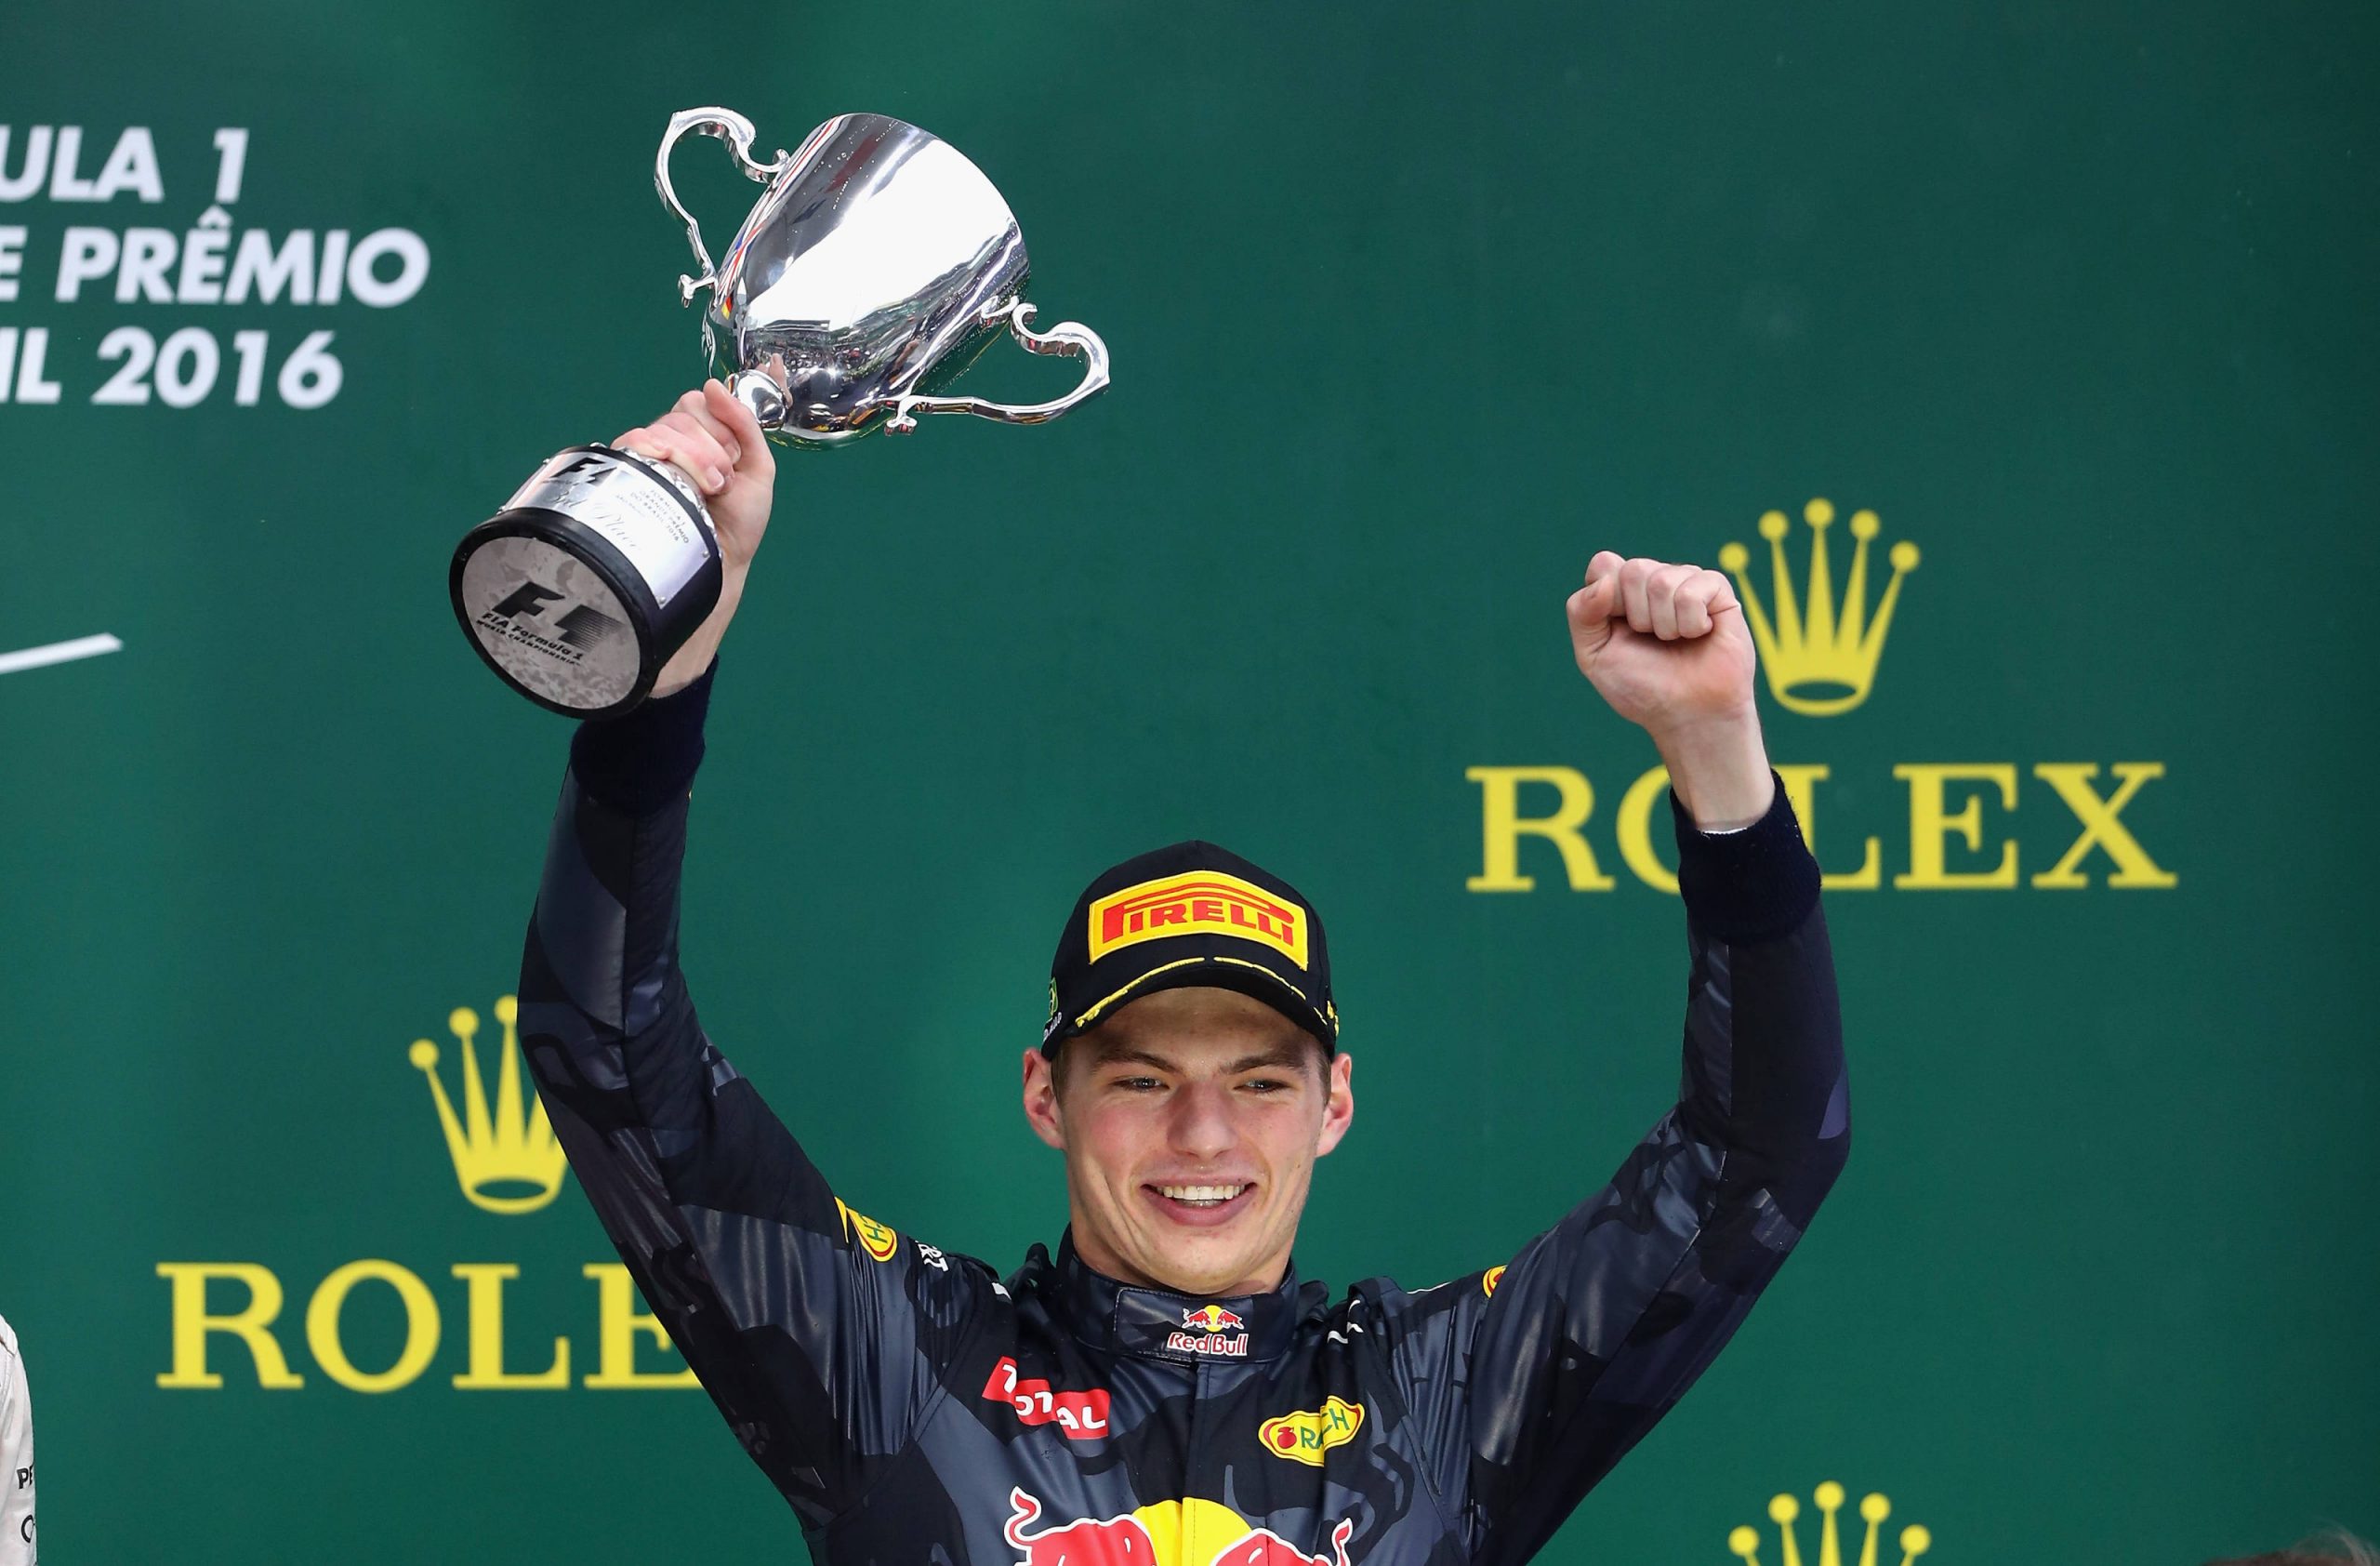 f1chronicle-2016 Brazilian Grand Prix - Max Verstappen (image copyright Red Bull Racing)